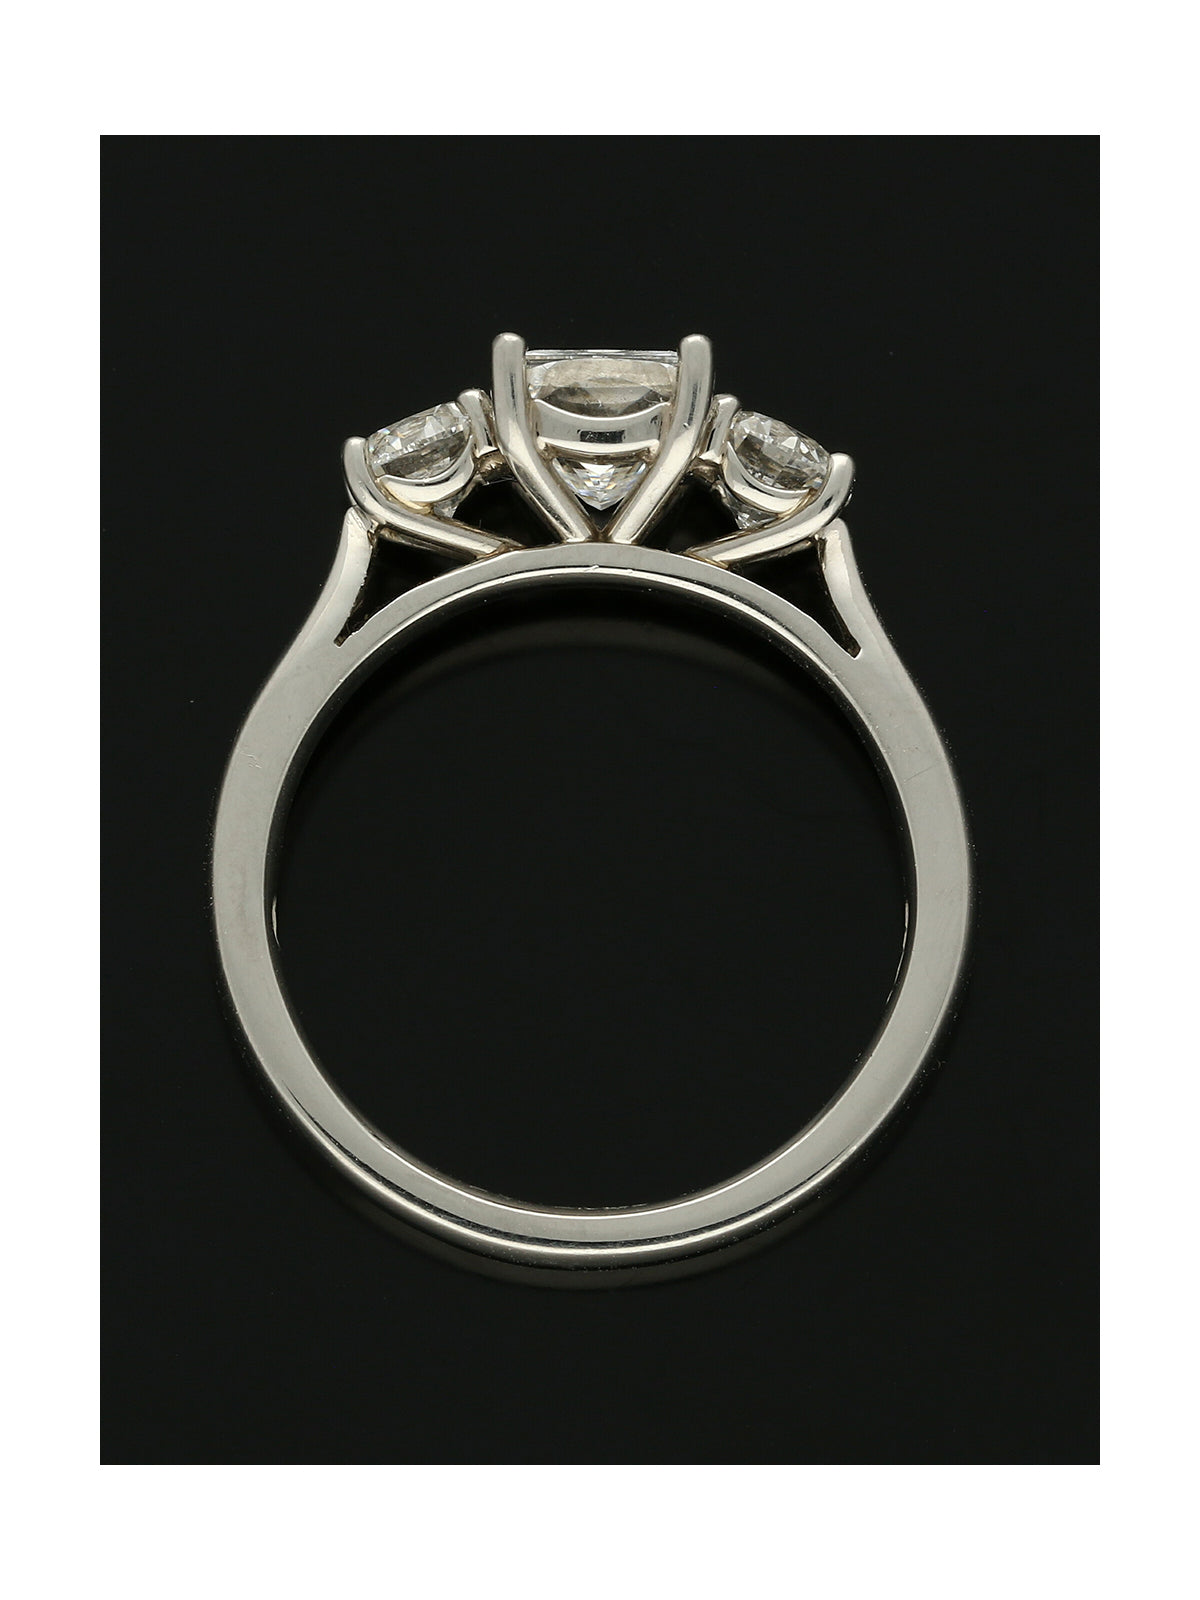 Diamond Three Stone Ring 2.00ct Certificated Cushion & Round Brilliant Cut in Platinum